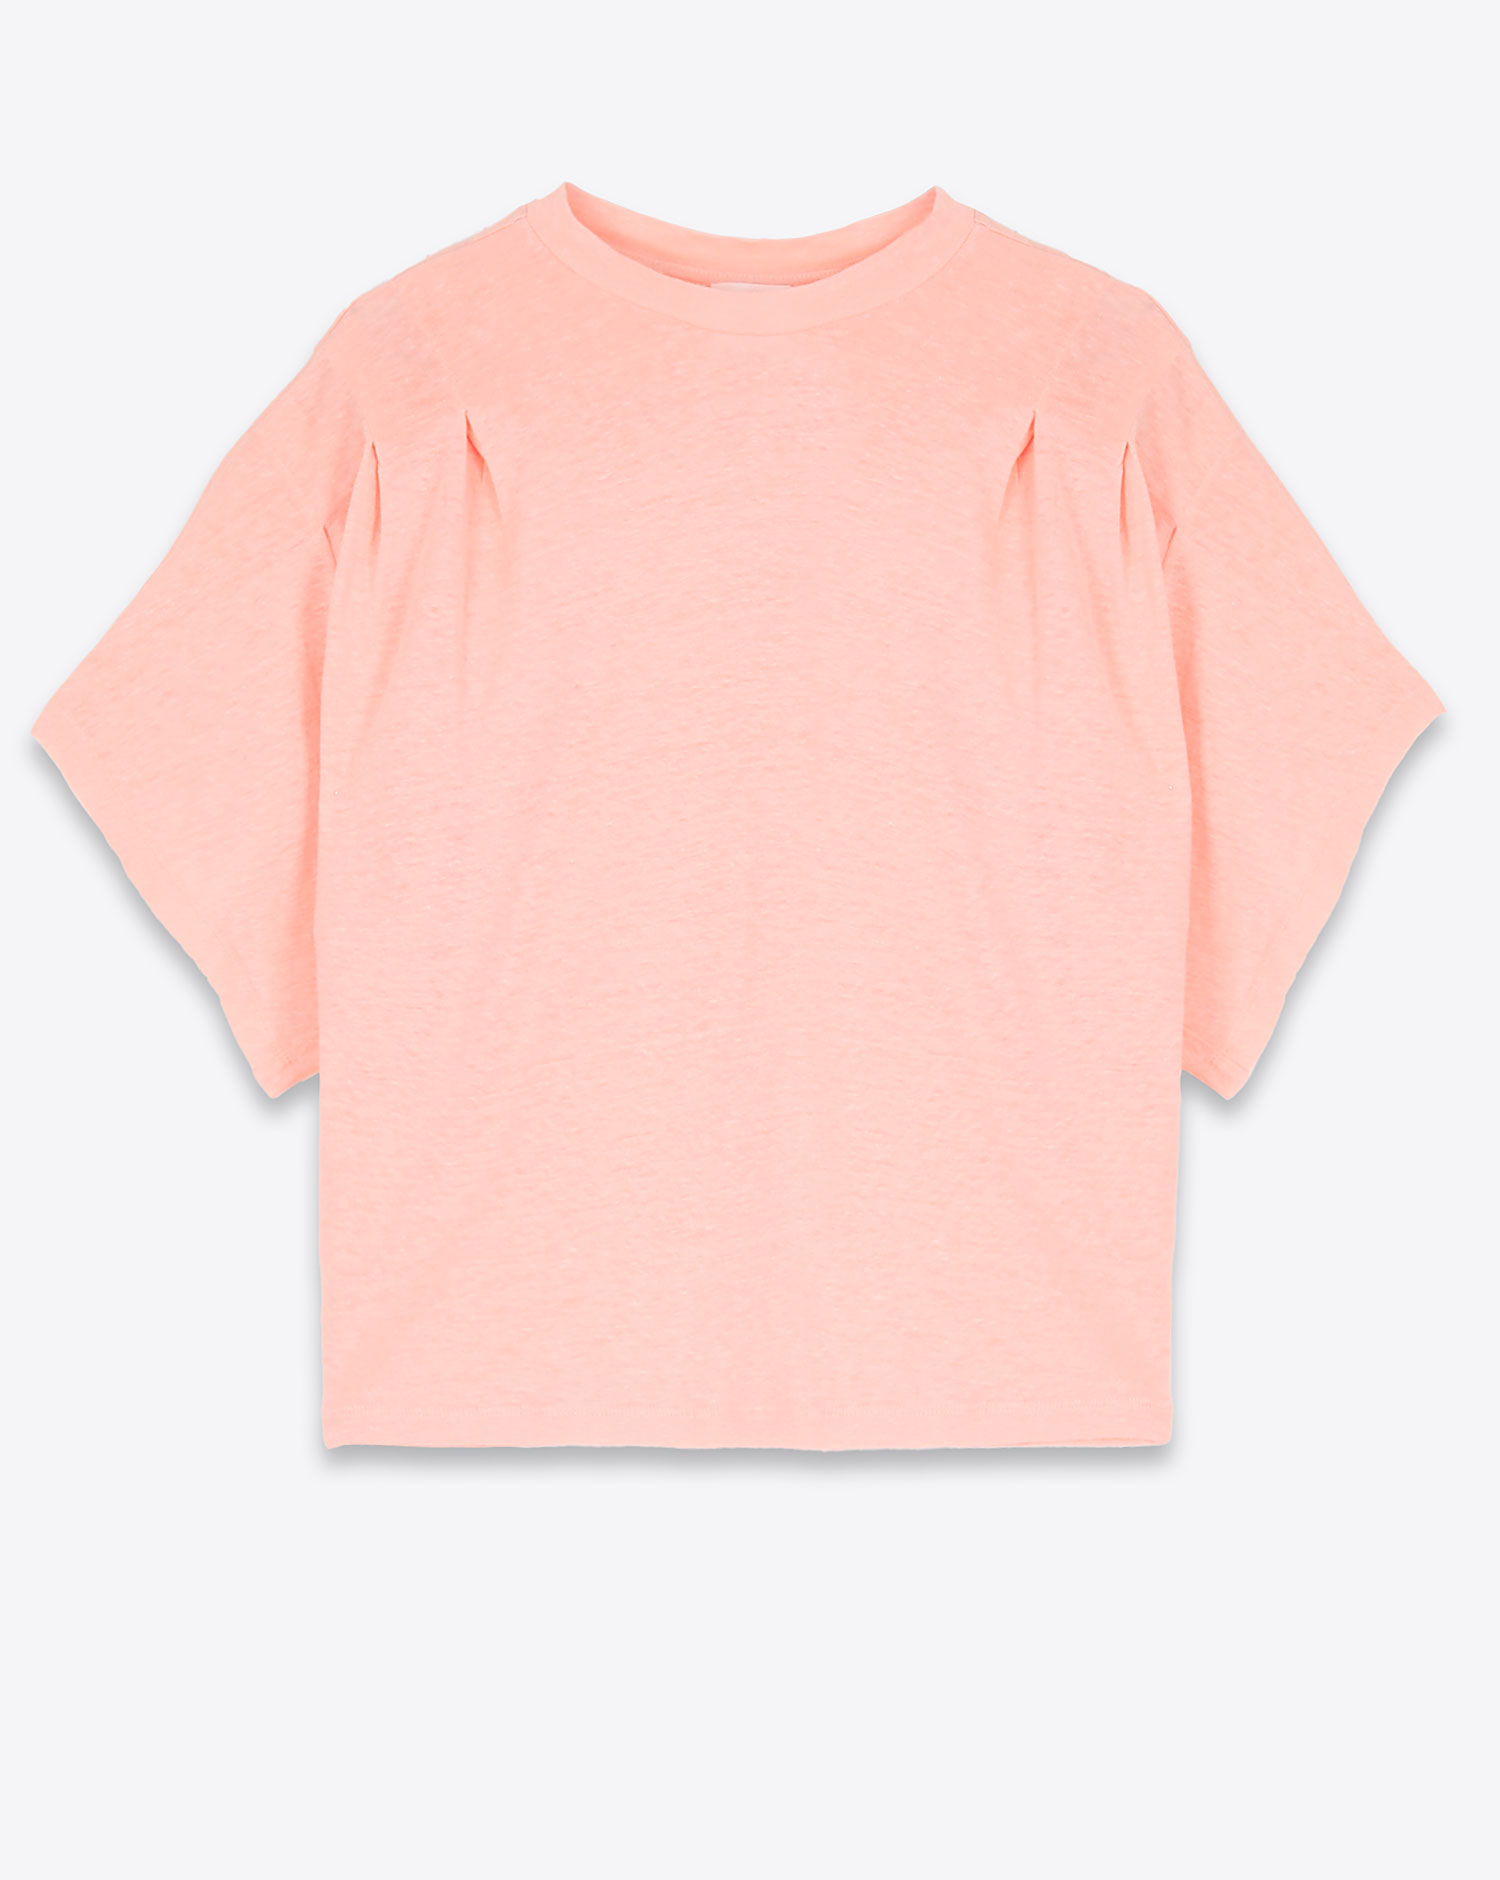 Tee-shirt Kianza Isabel Marant Etoile peach 